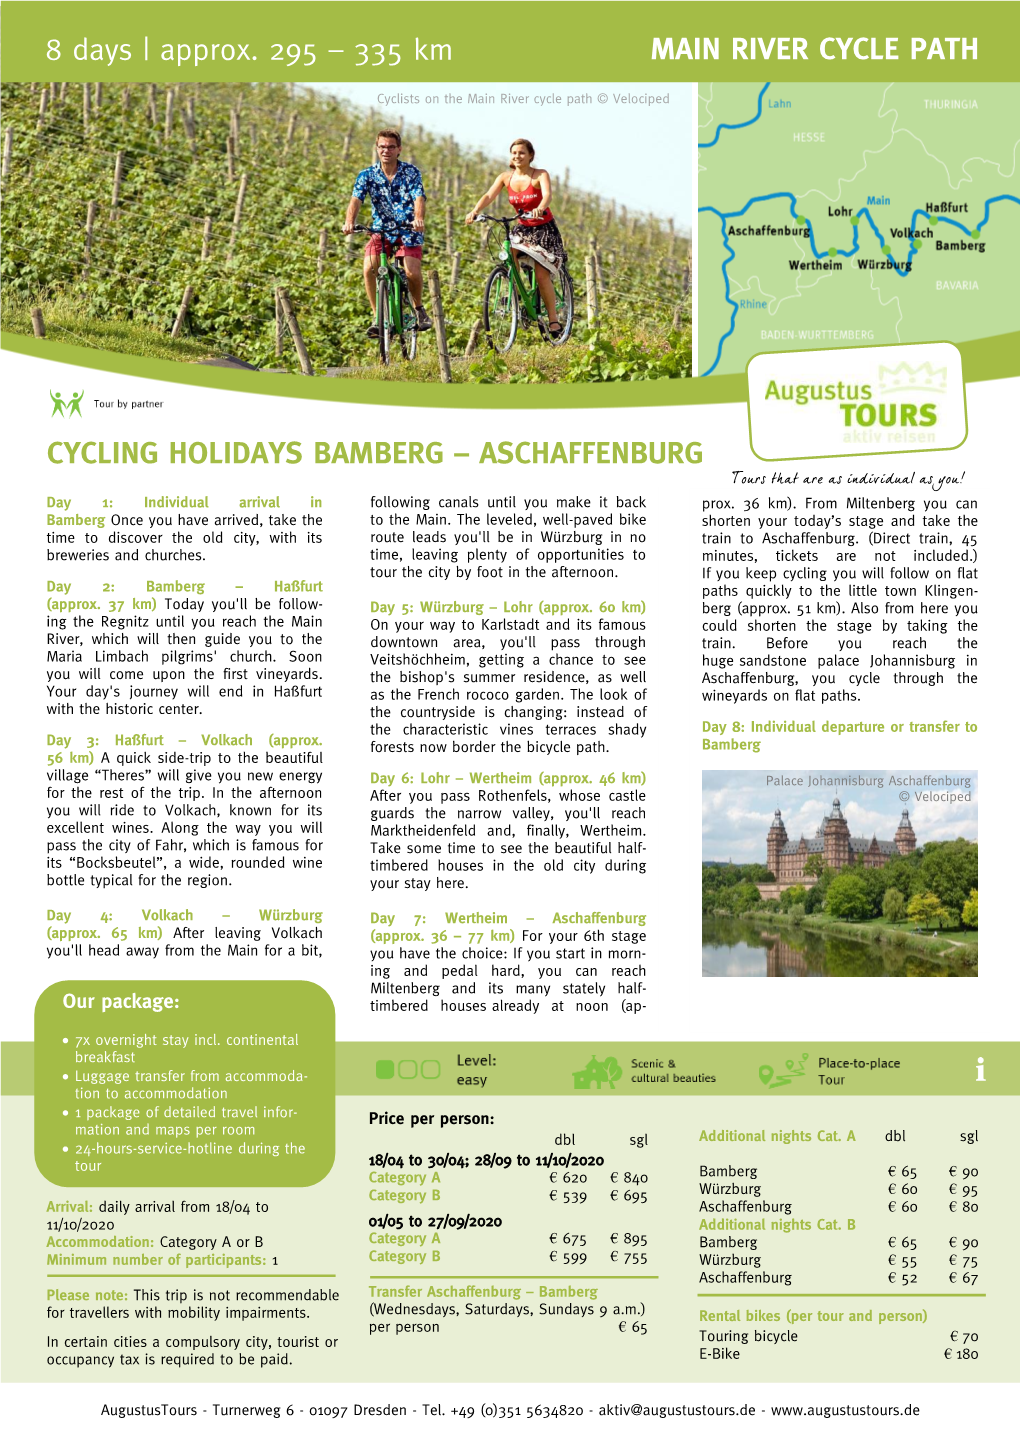 MAIN RIVER CYCLE PATH 8 Days | Approx. 295 – 335 Km CYCLING HOLIDAYS BAMBERG – ASCHAFFENBURG